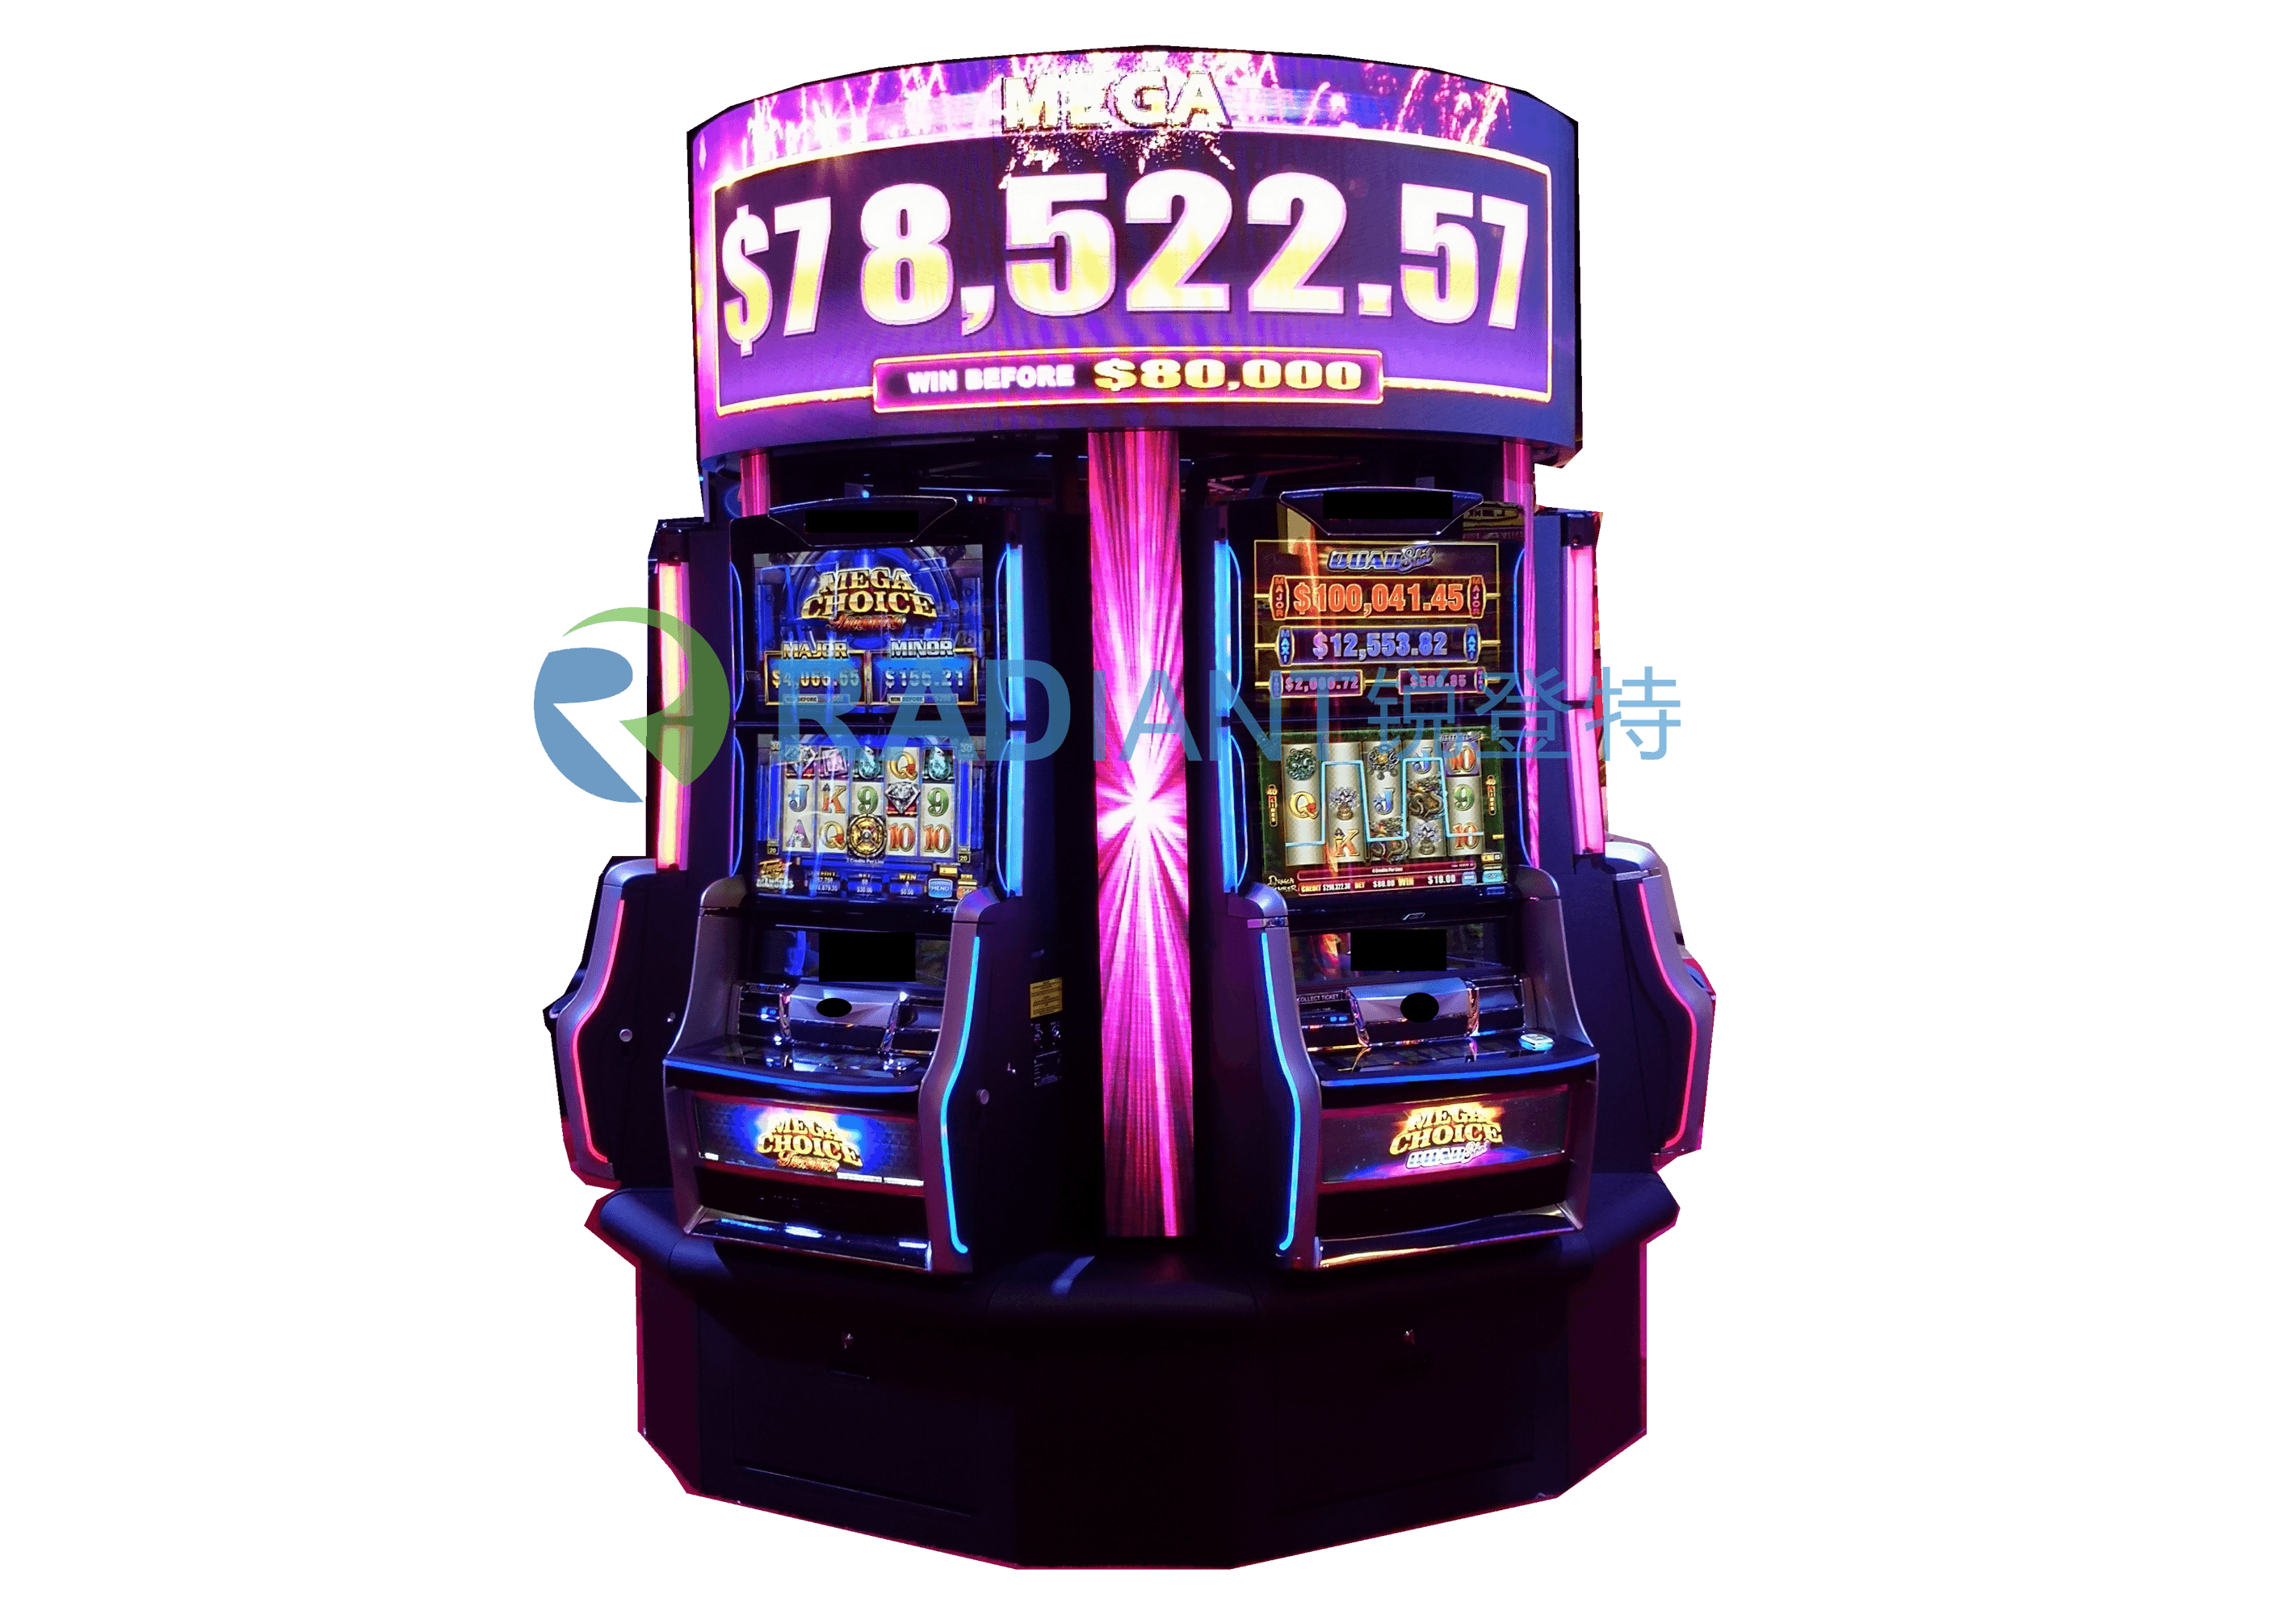 Indoor gaming LED signage for casino slot machine Featured Image